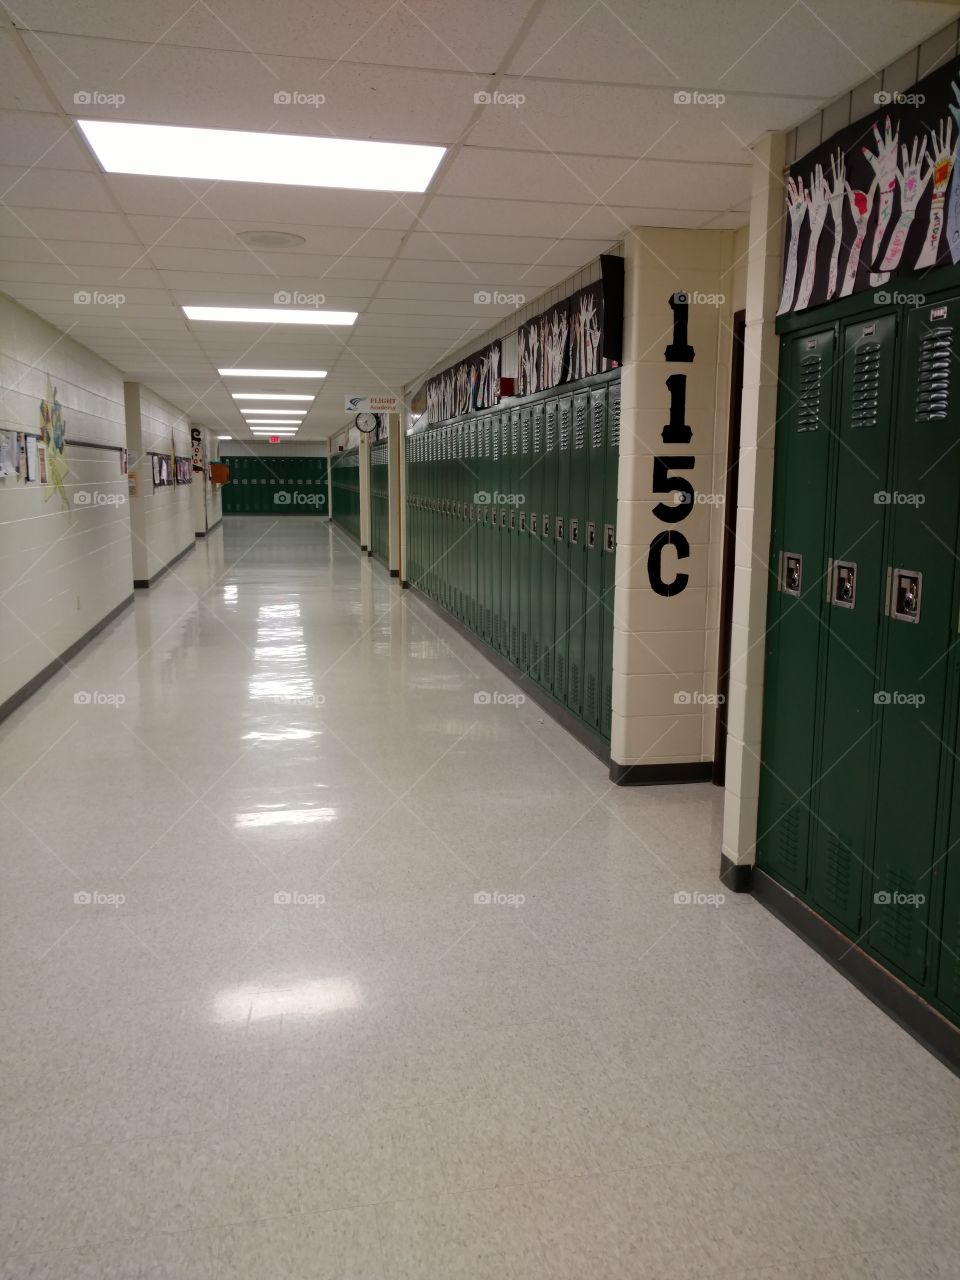 School Lockers on the Right Side of Hallway